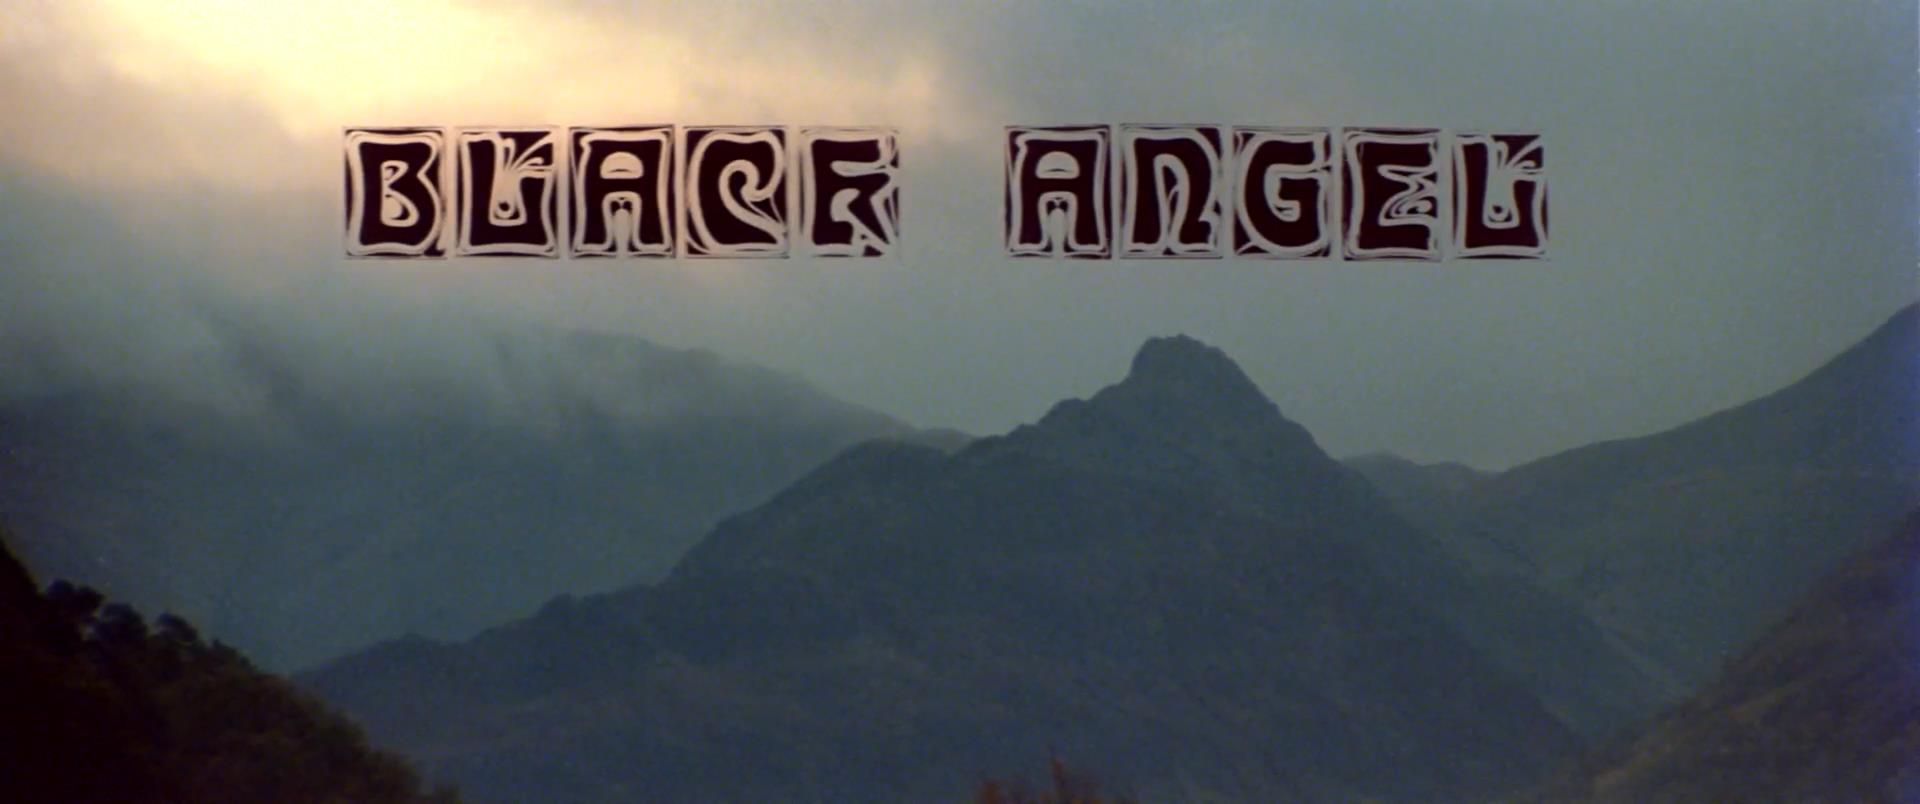 BlackAngel-TitleCard.jpg